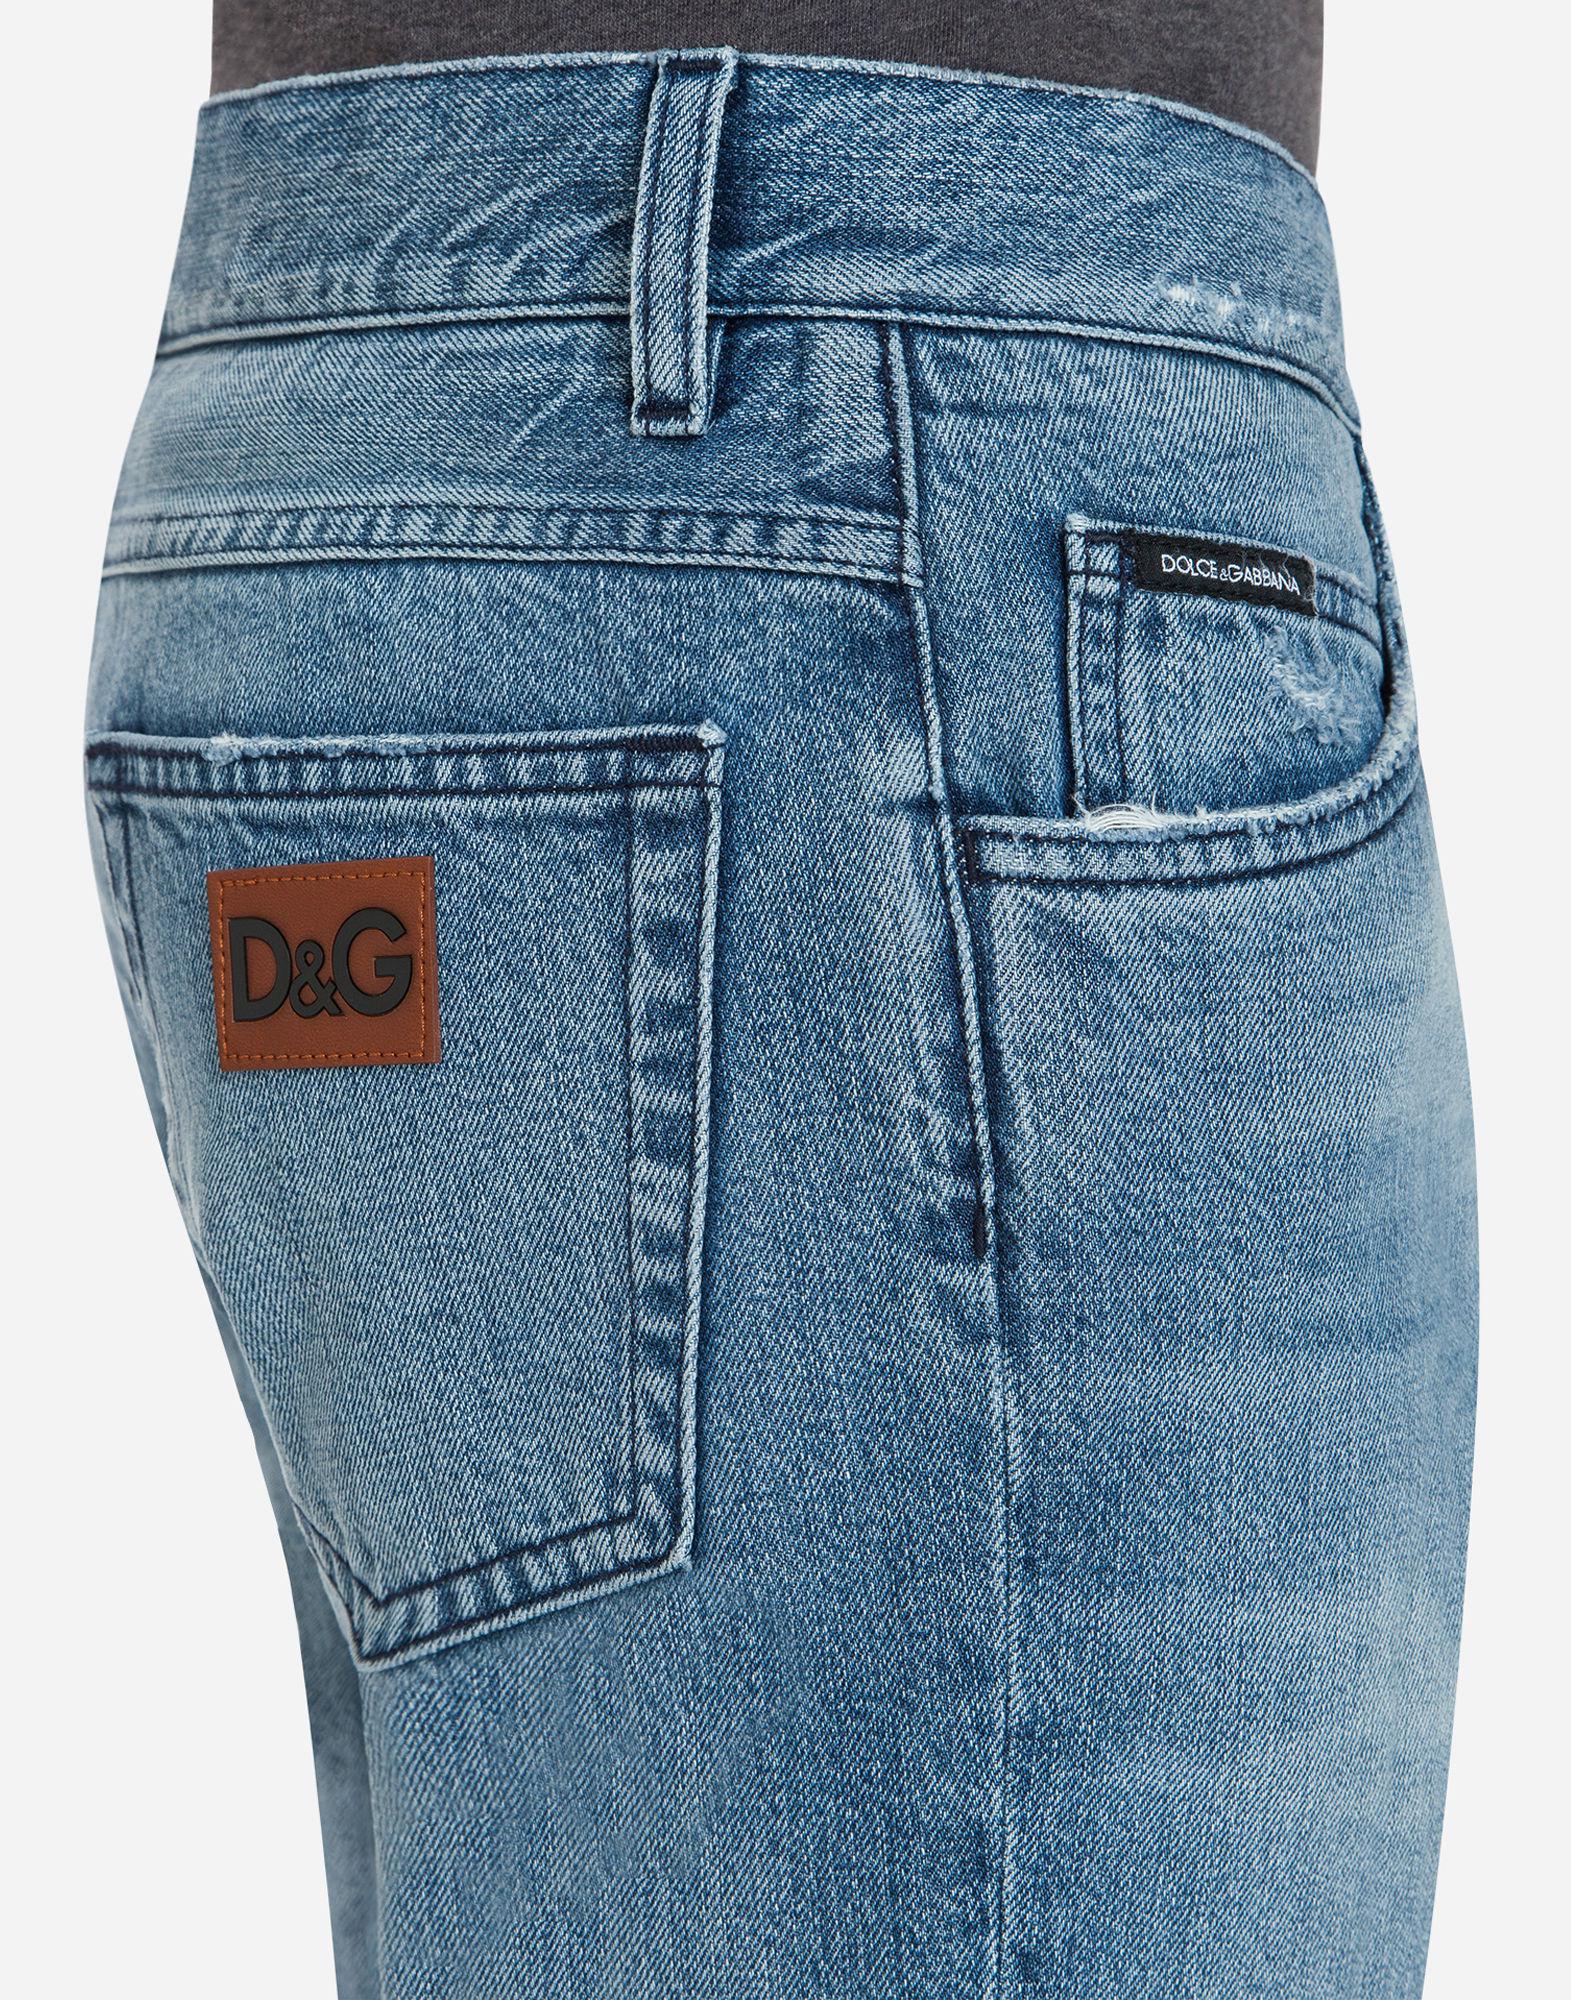 Dolce & Gabbana Denim Classic Patchwork Jeans in Blue for Men - Lyst